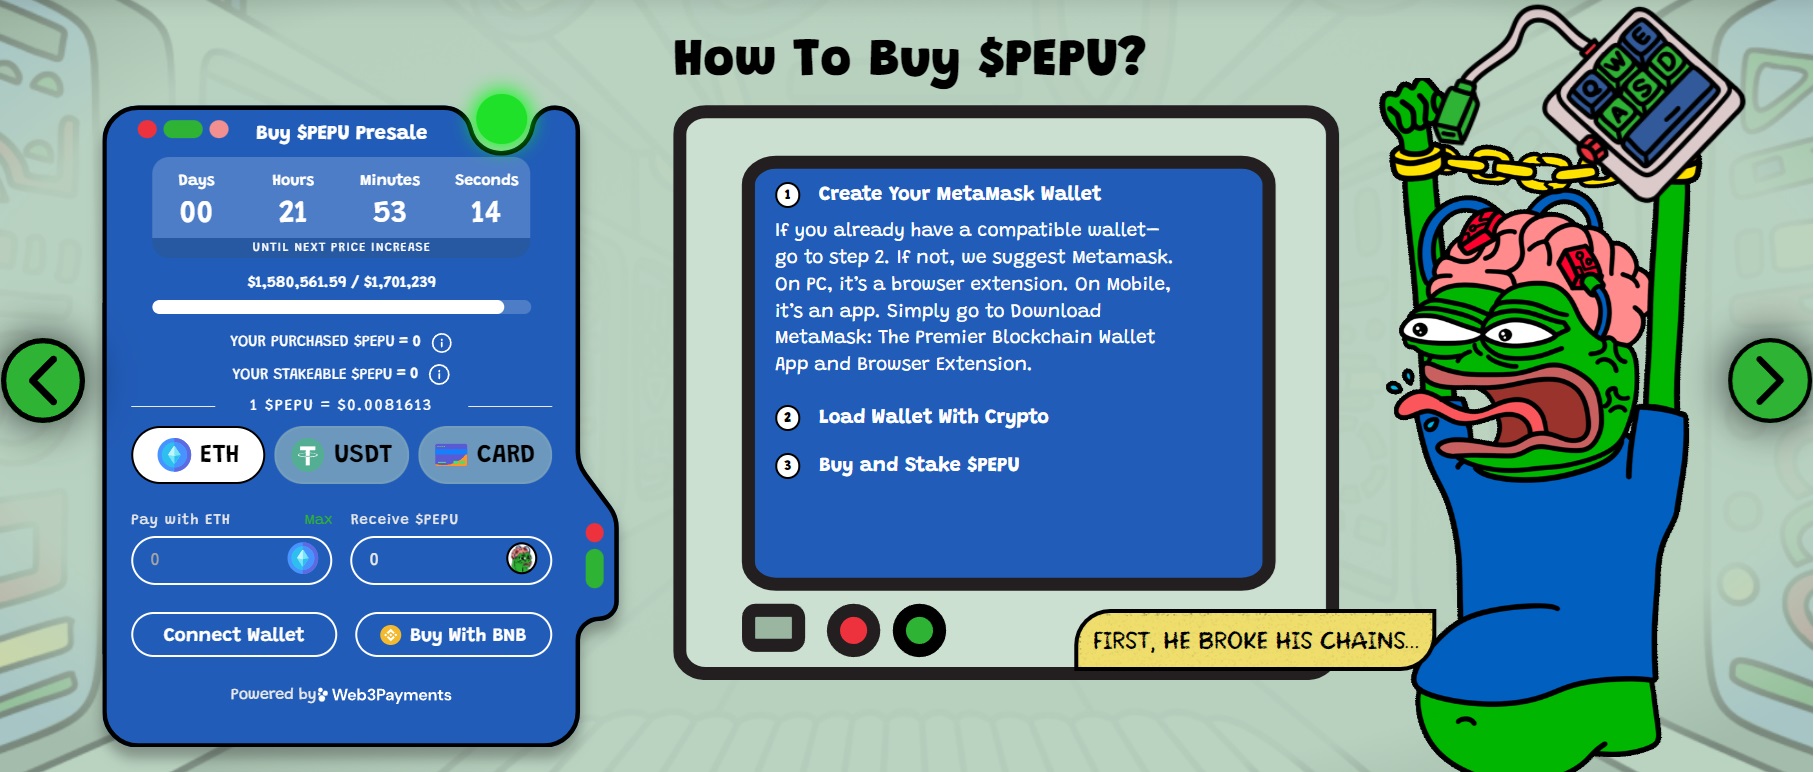 How To Buy Pepu